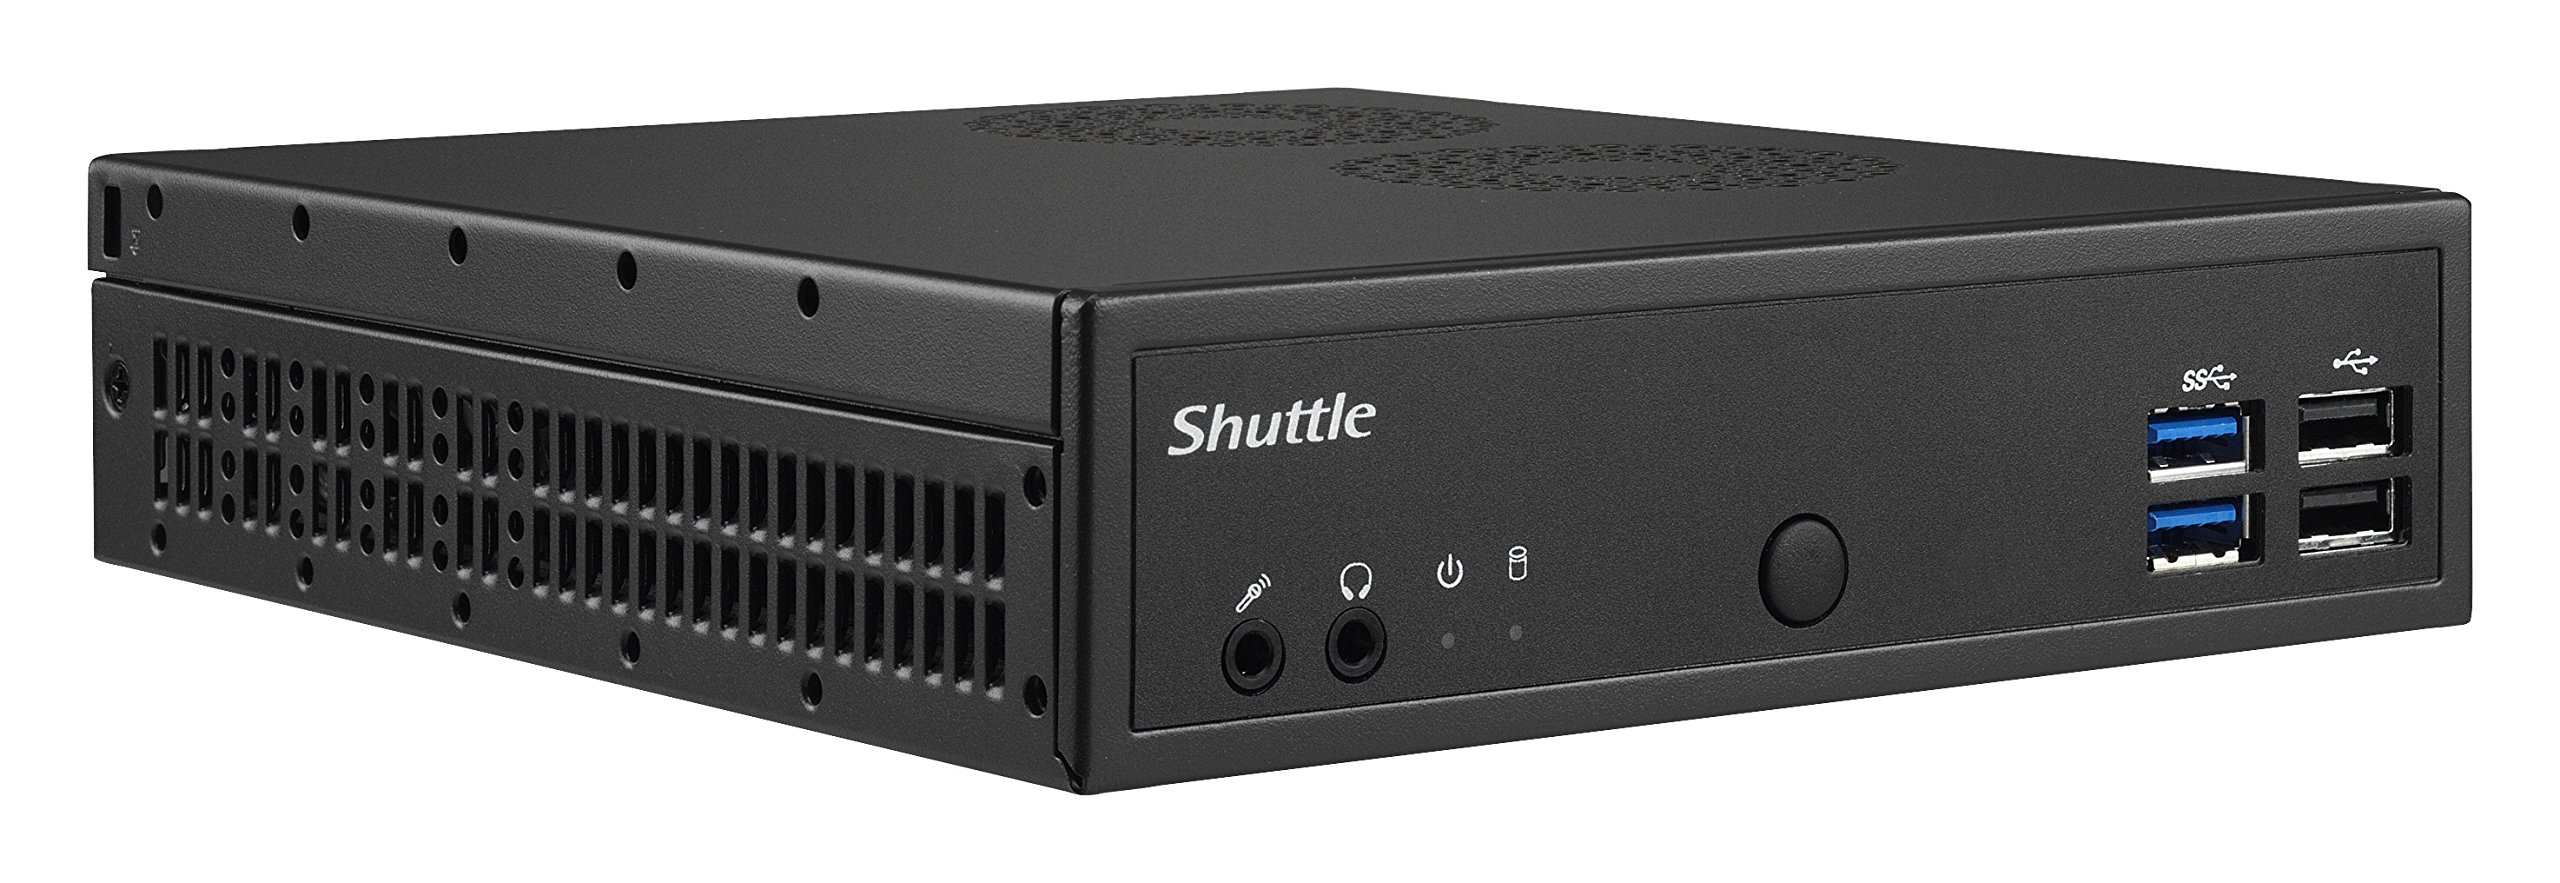 Shuttle XPC Slim DH02U Intel Kabylake Celeron 3865U, MXM GTX 1050 4 HDMI, Support 4K/UHD, Single Gig LAN, Dual Slot Max 32GB RAM